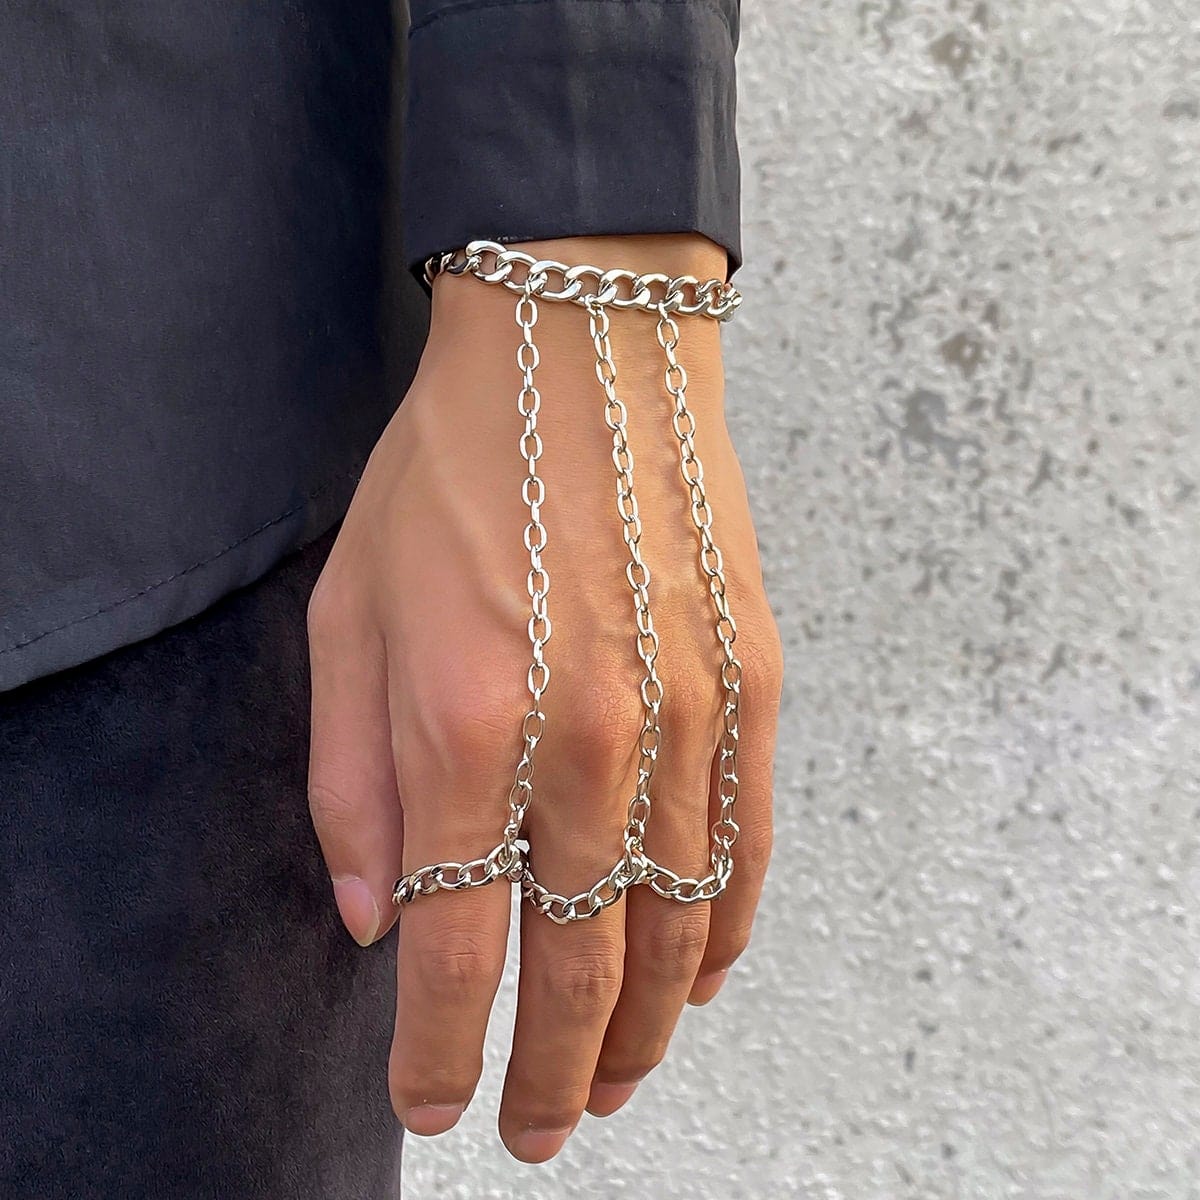 Chic Silver Tone Finger Ring Chain Bracelet | Mens bracelet fashion, Chains  for men, Mens jewelry bracelet